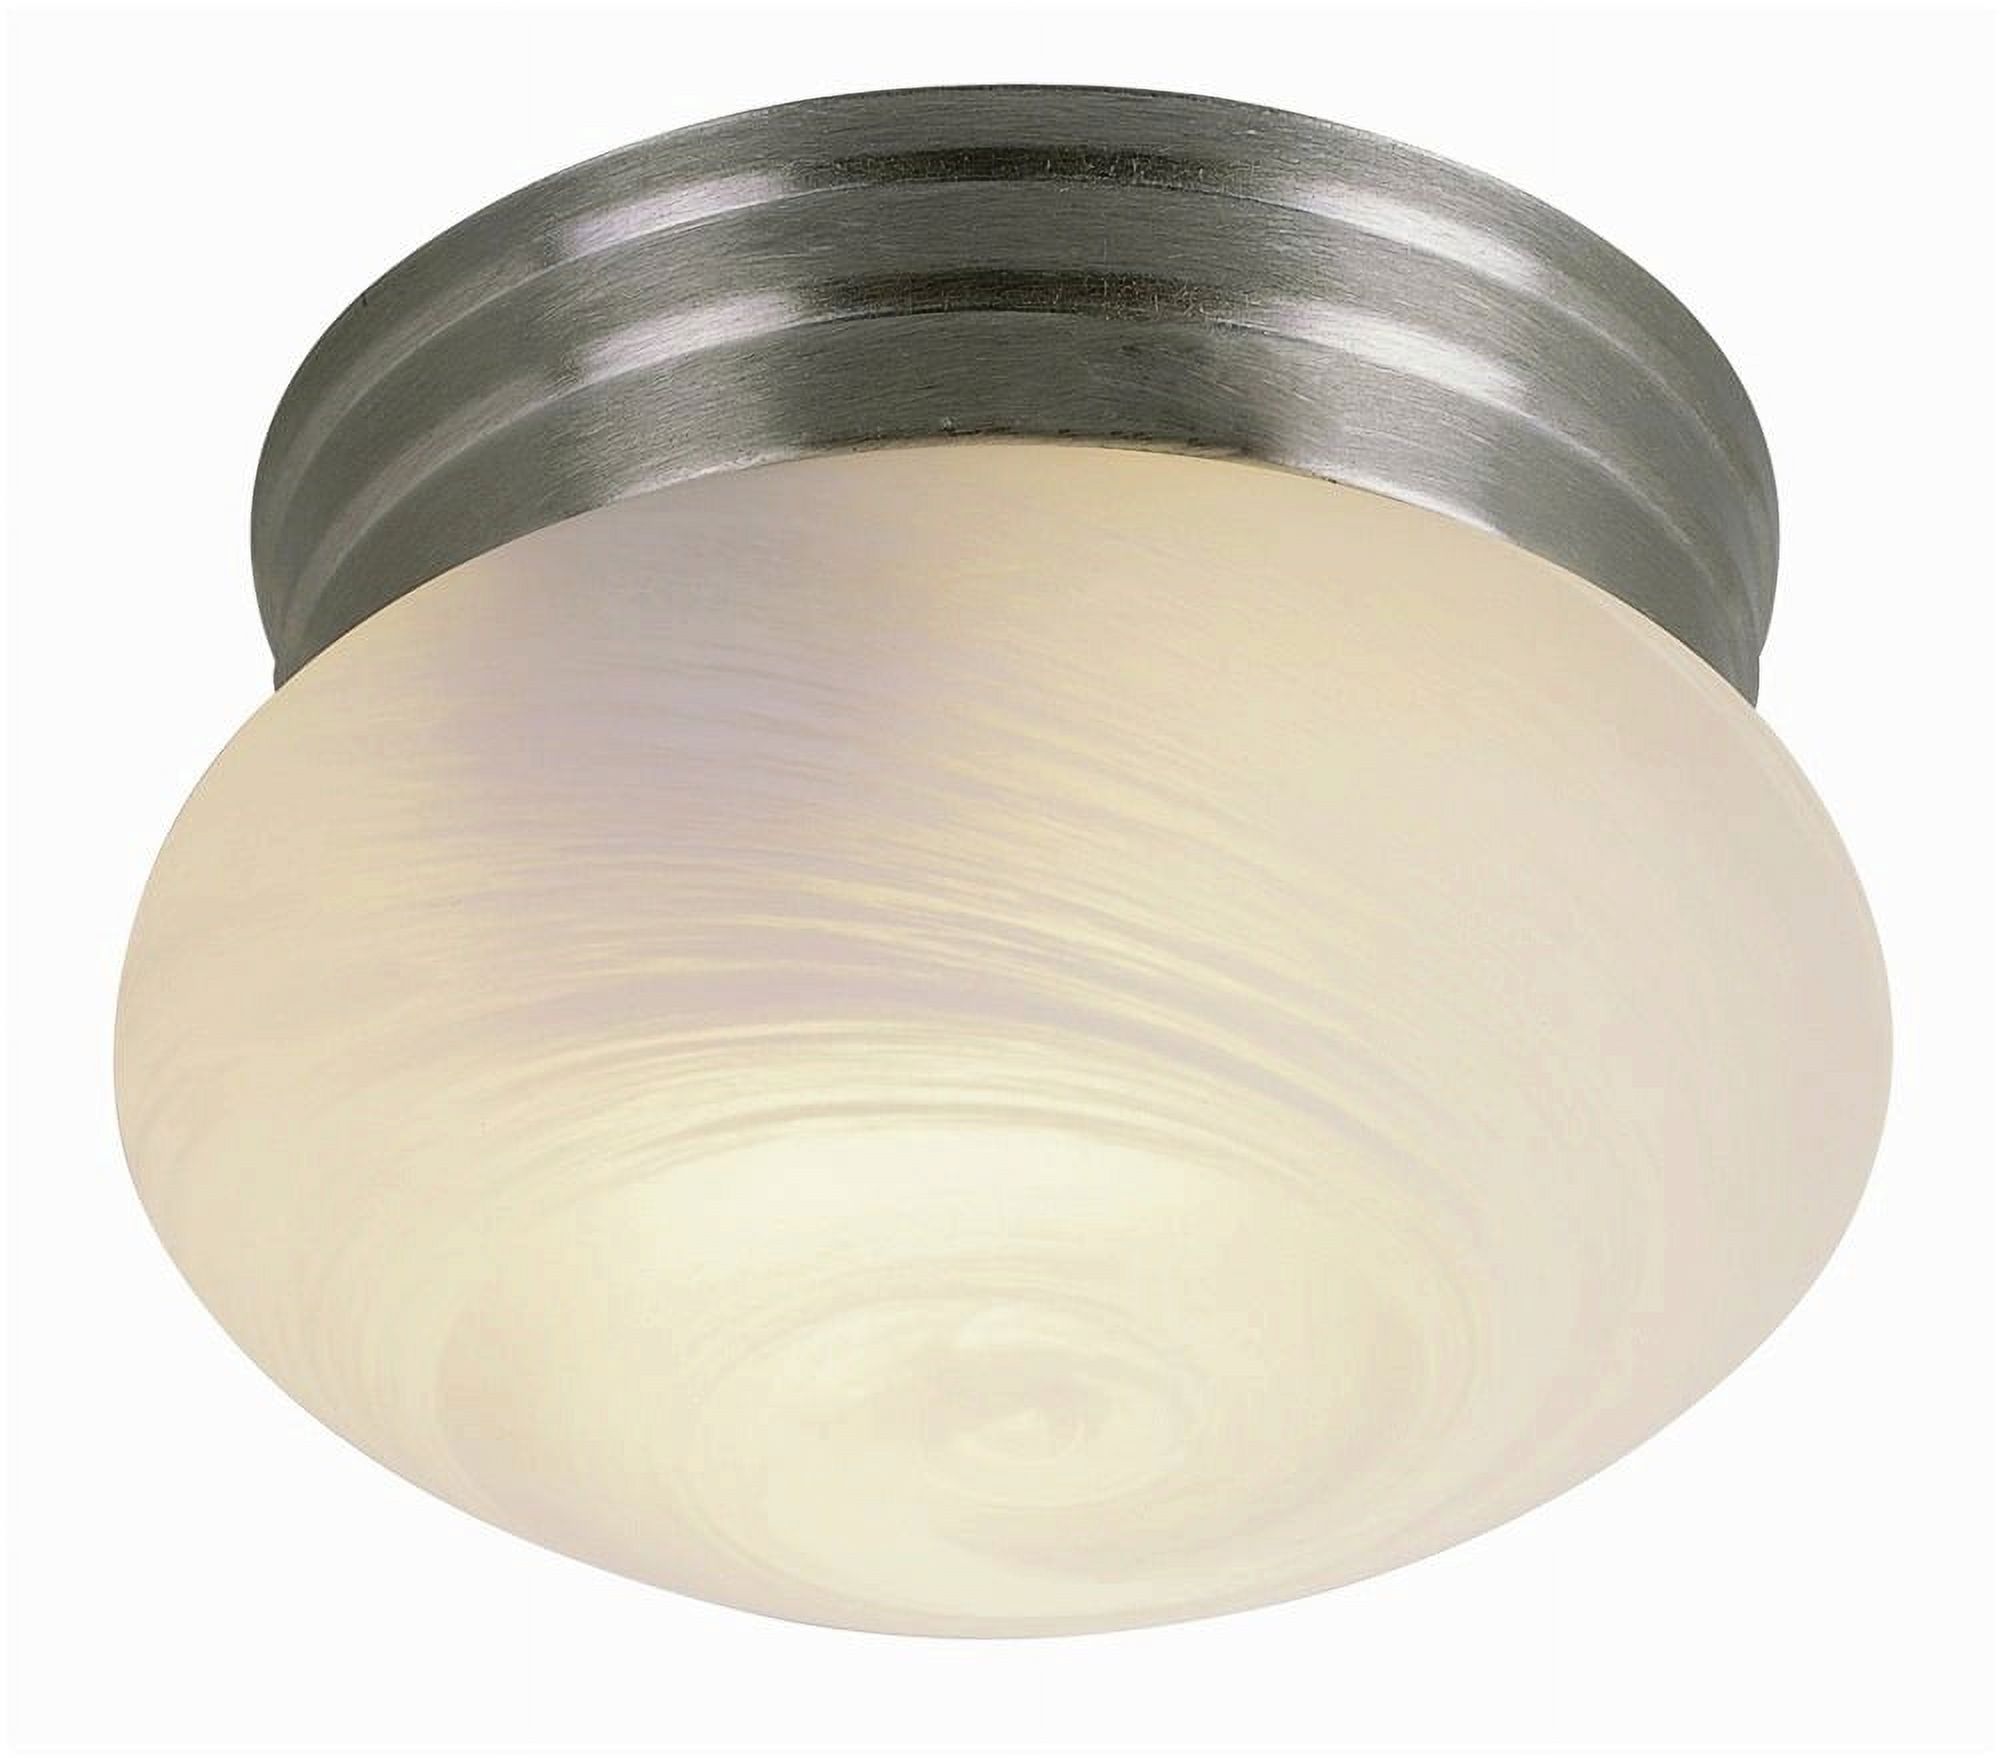 3619 BN-Trans Globe Lighting-8 Inch Flush Mount-Brushed Nickel Finish - image 1 of 2